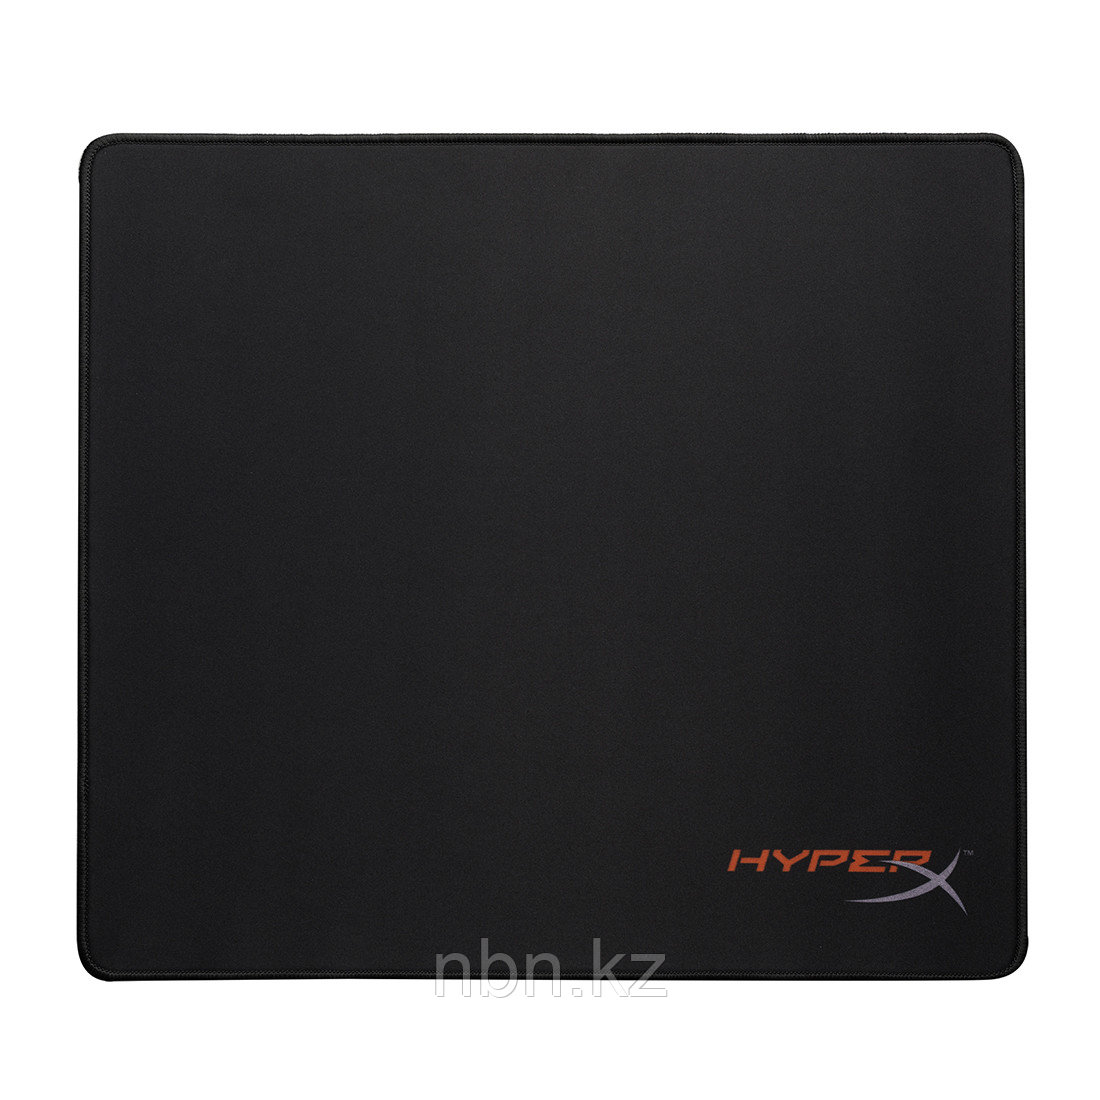 Коврик для компьютерной мыши HyperX Pro Gaming (Small) HX-MPFS-SM